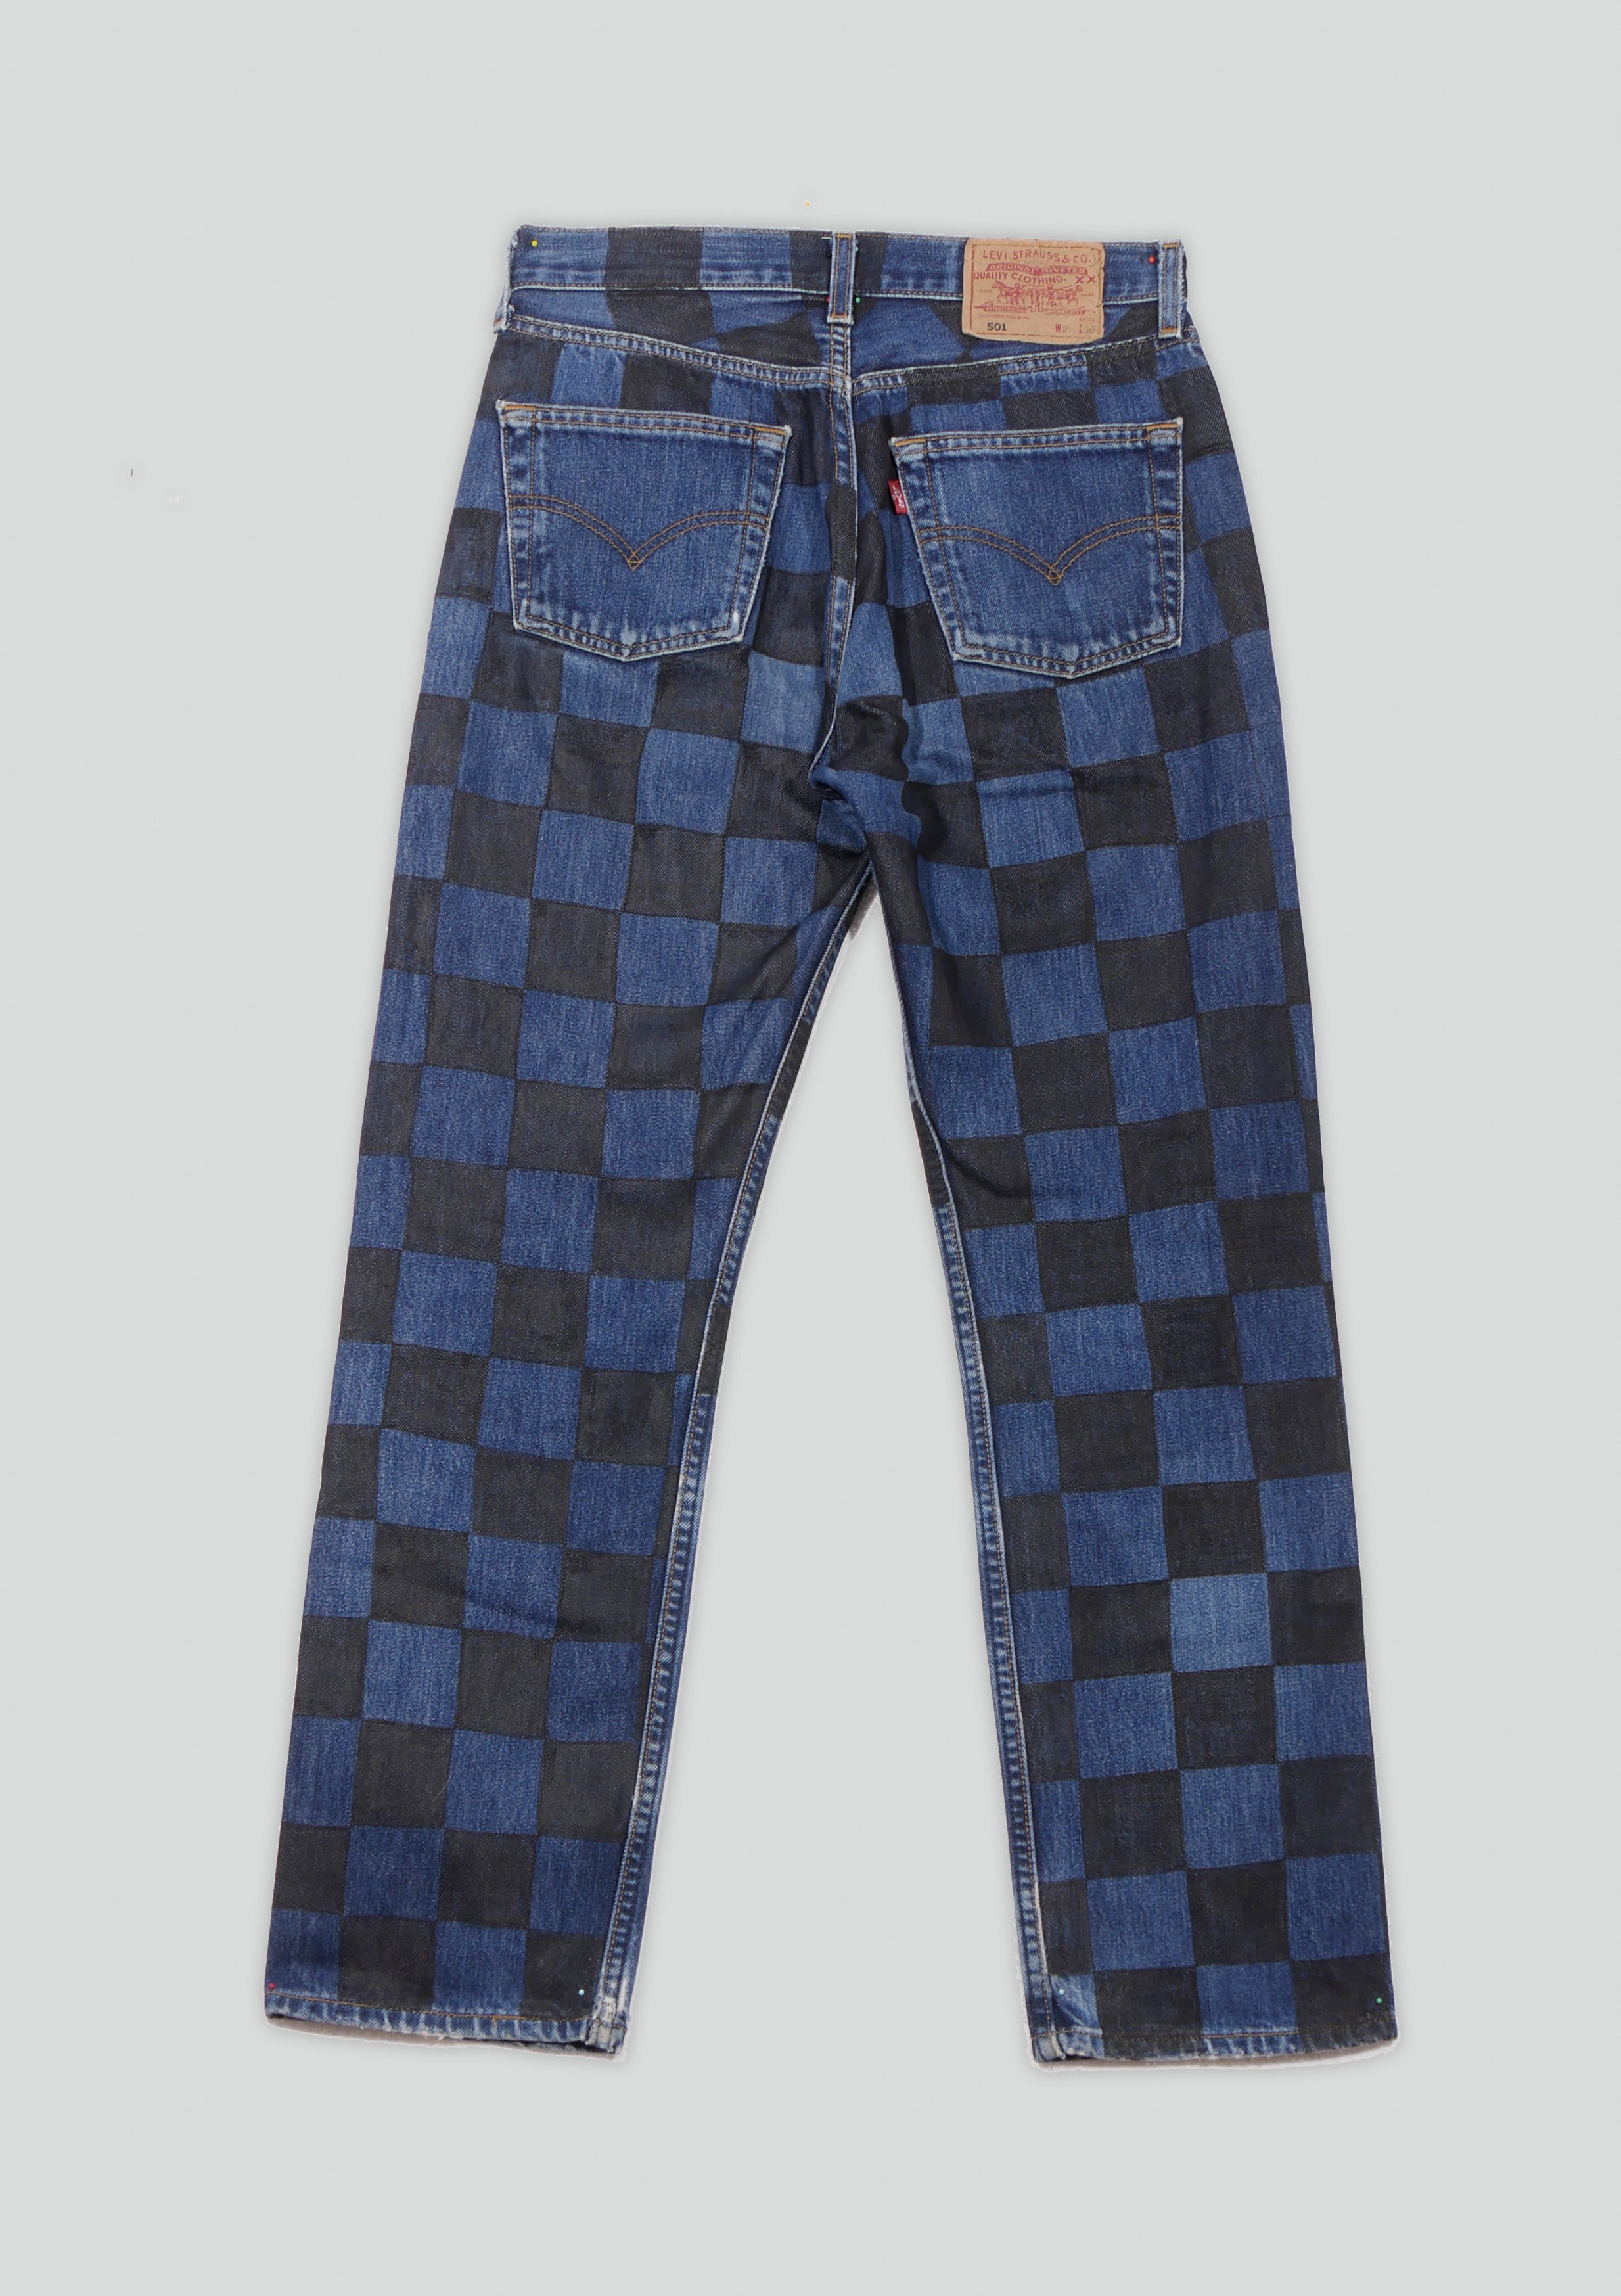 Jeans custom #1